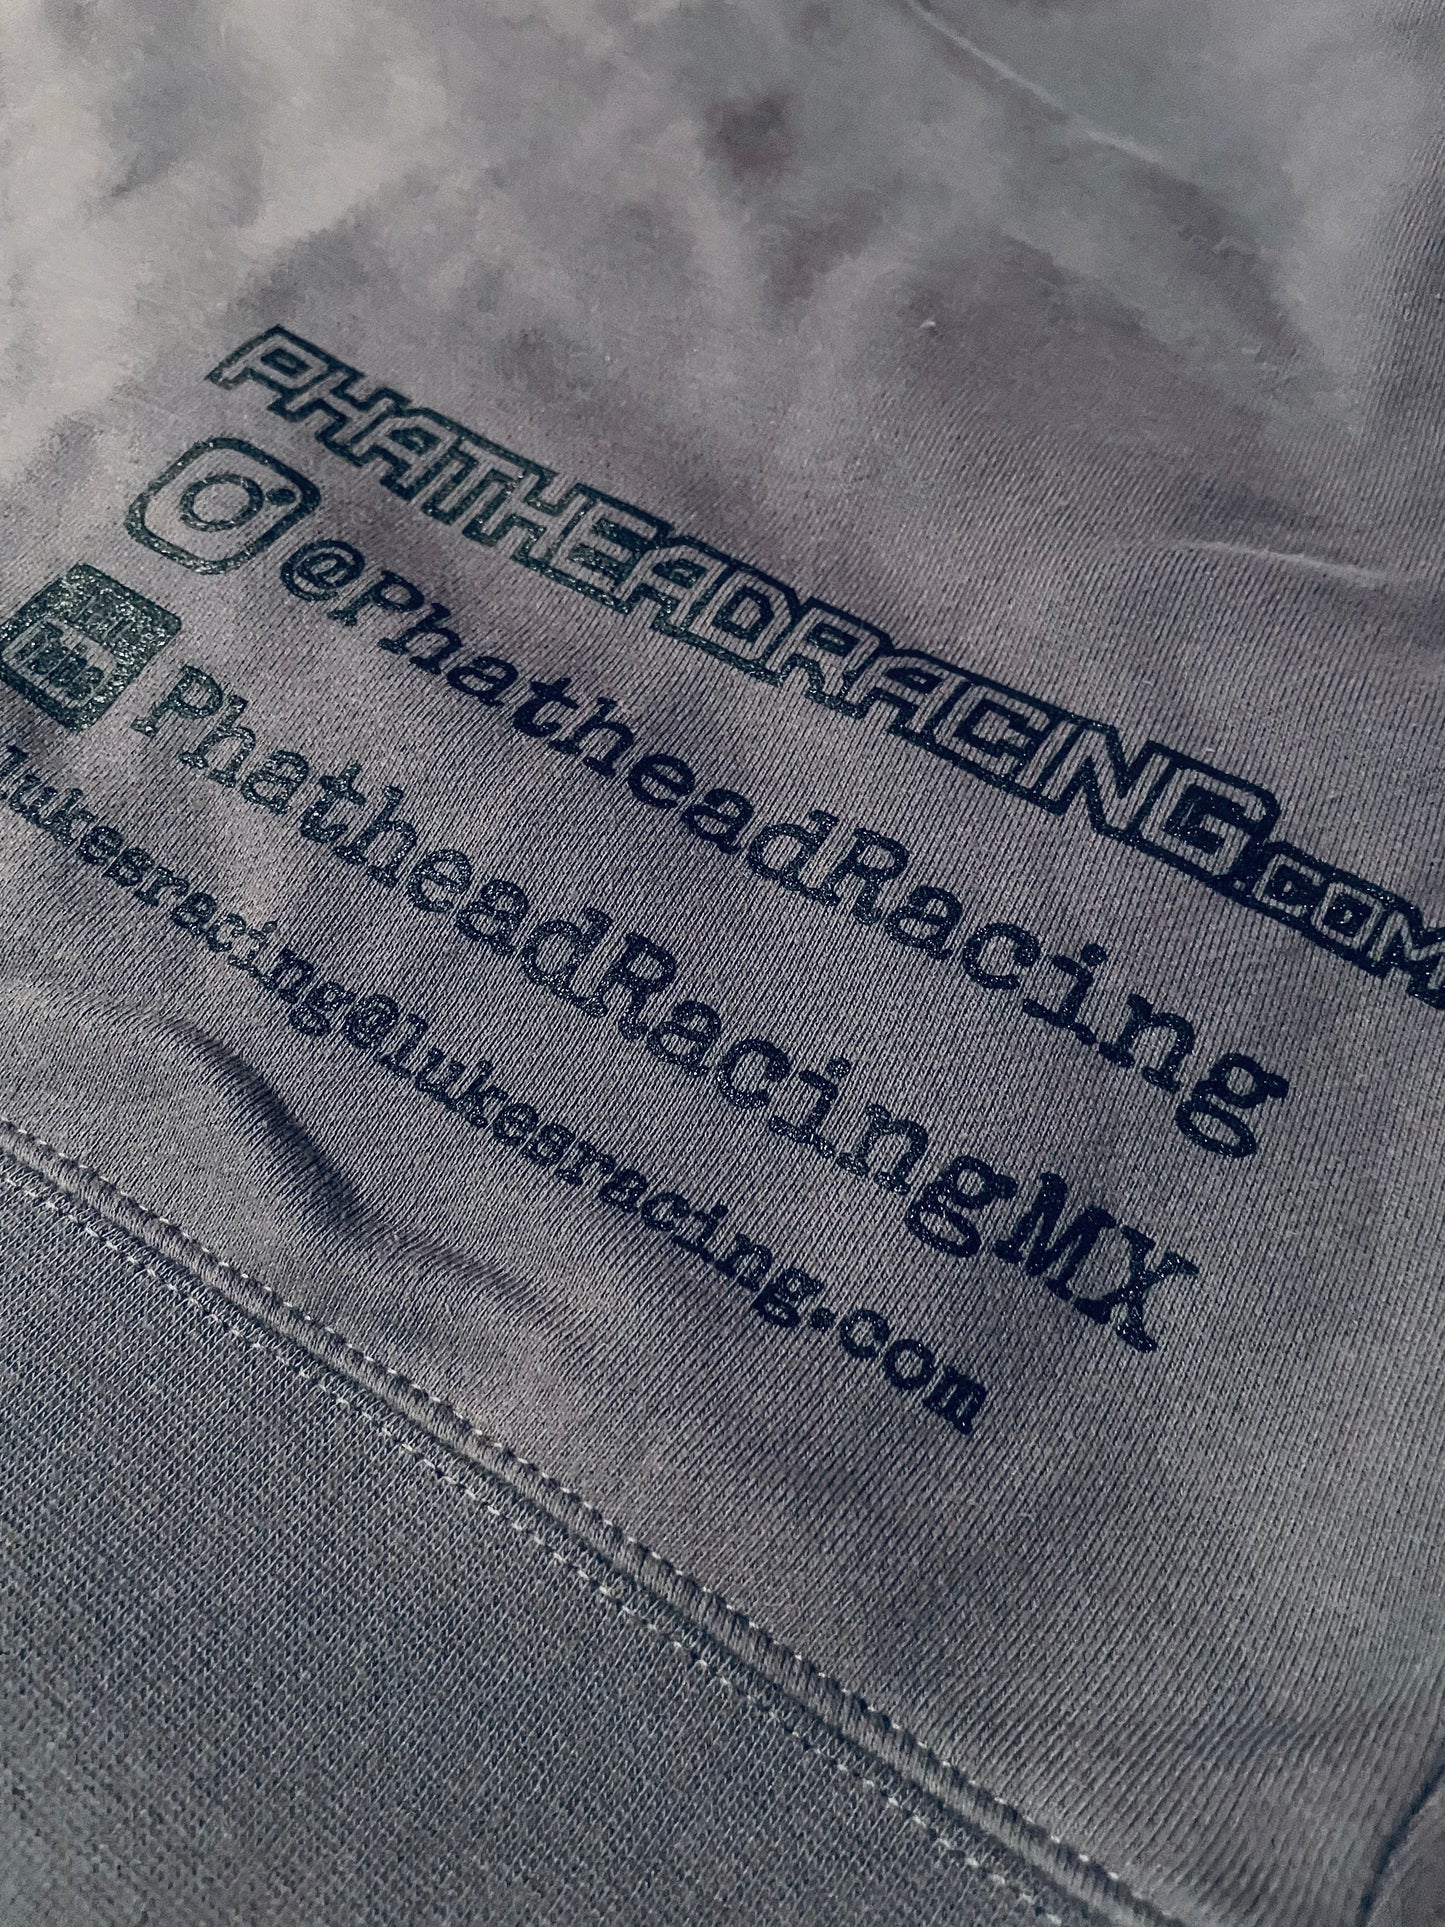 Phathead Racing Hoodie - Full Zip logo Jacket  - Gray